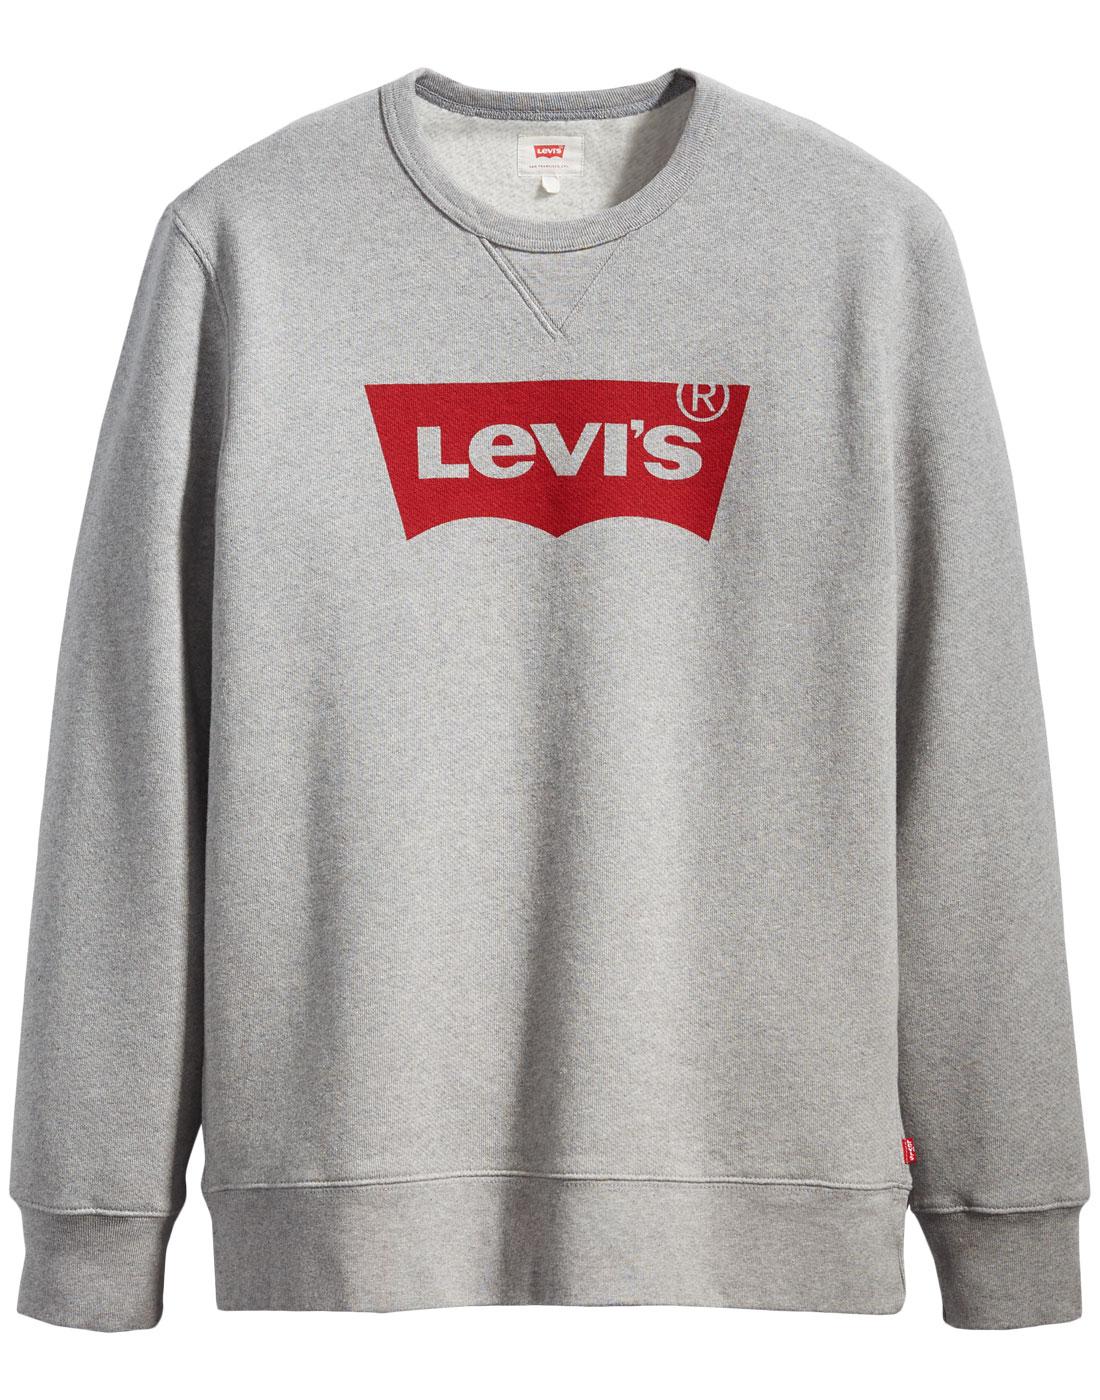 LEVI'S Retro 70s Batwing Logo Graphic Sweatshirt in Grey Heather